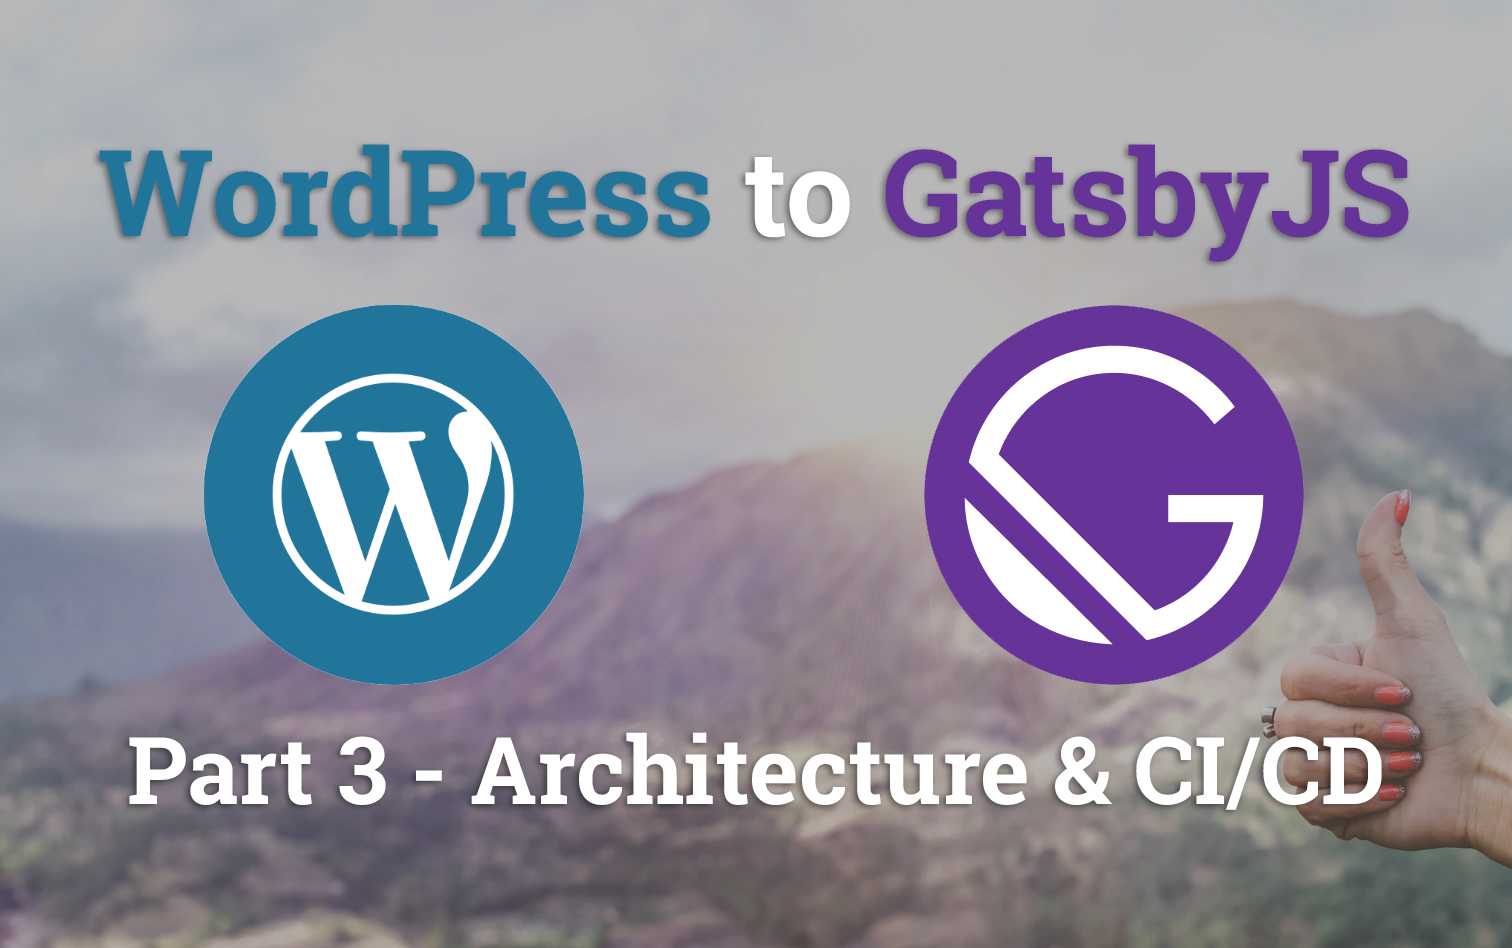 Migrating WordPress to GatsbyJS - Architecture & CI/CD